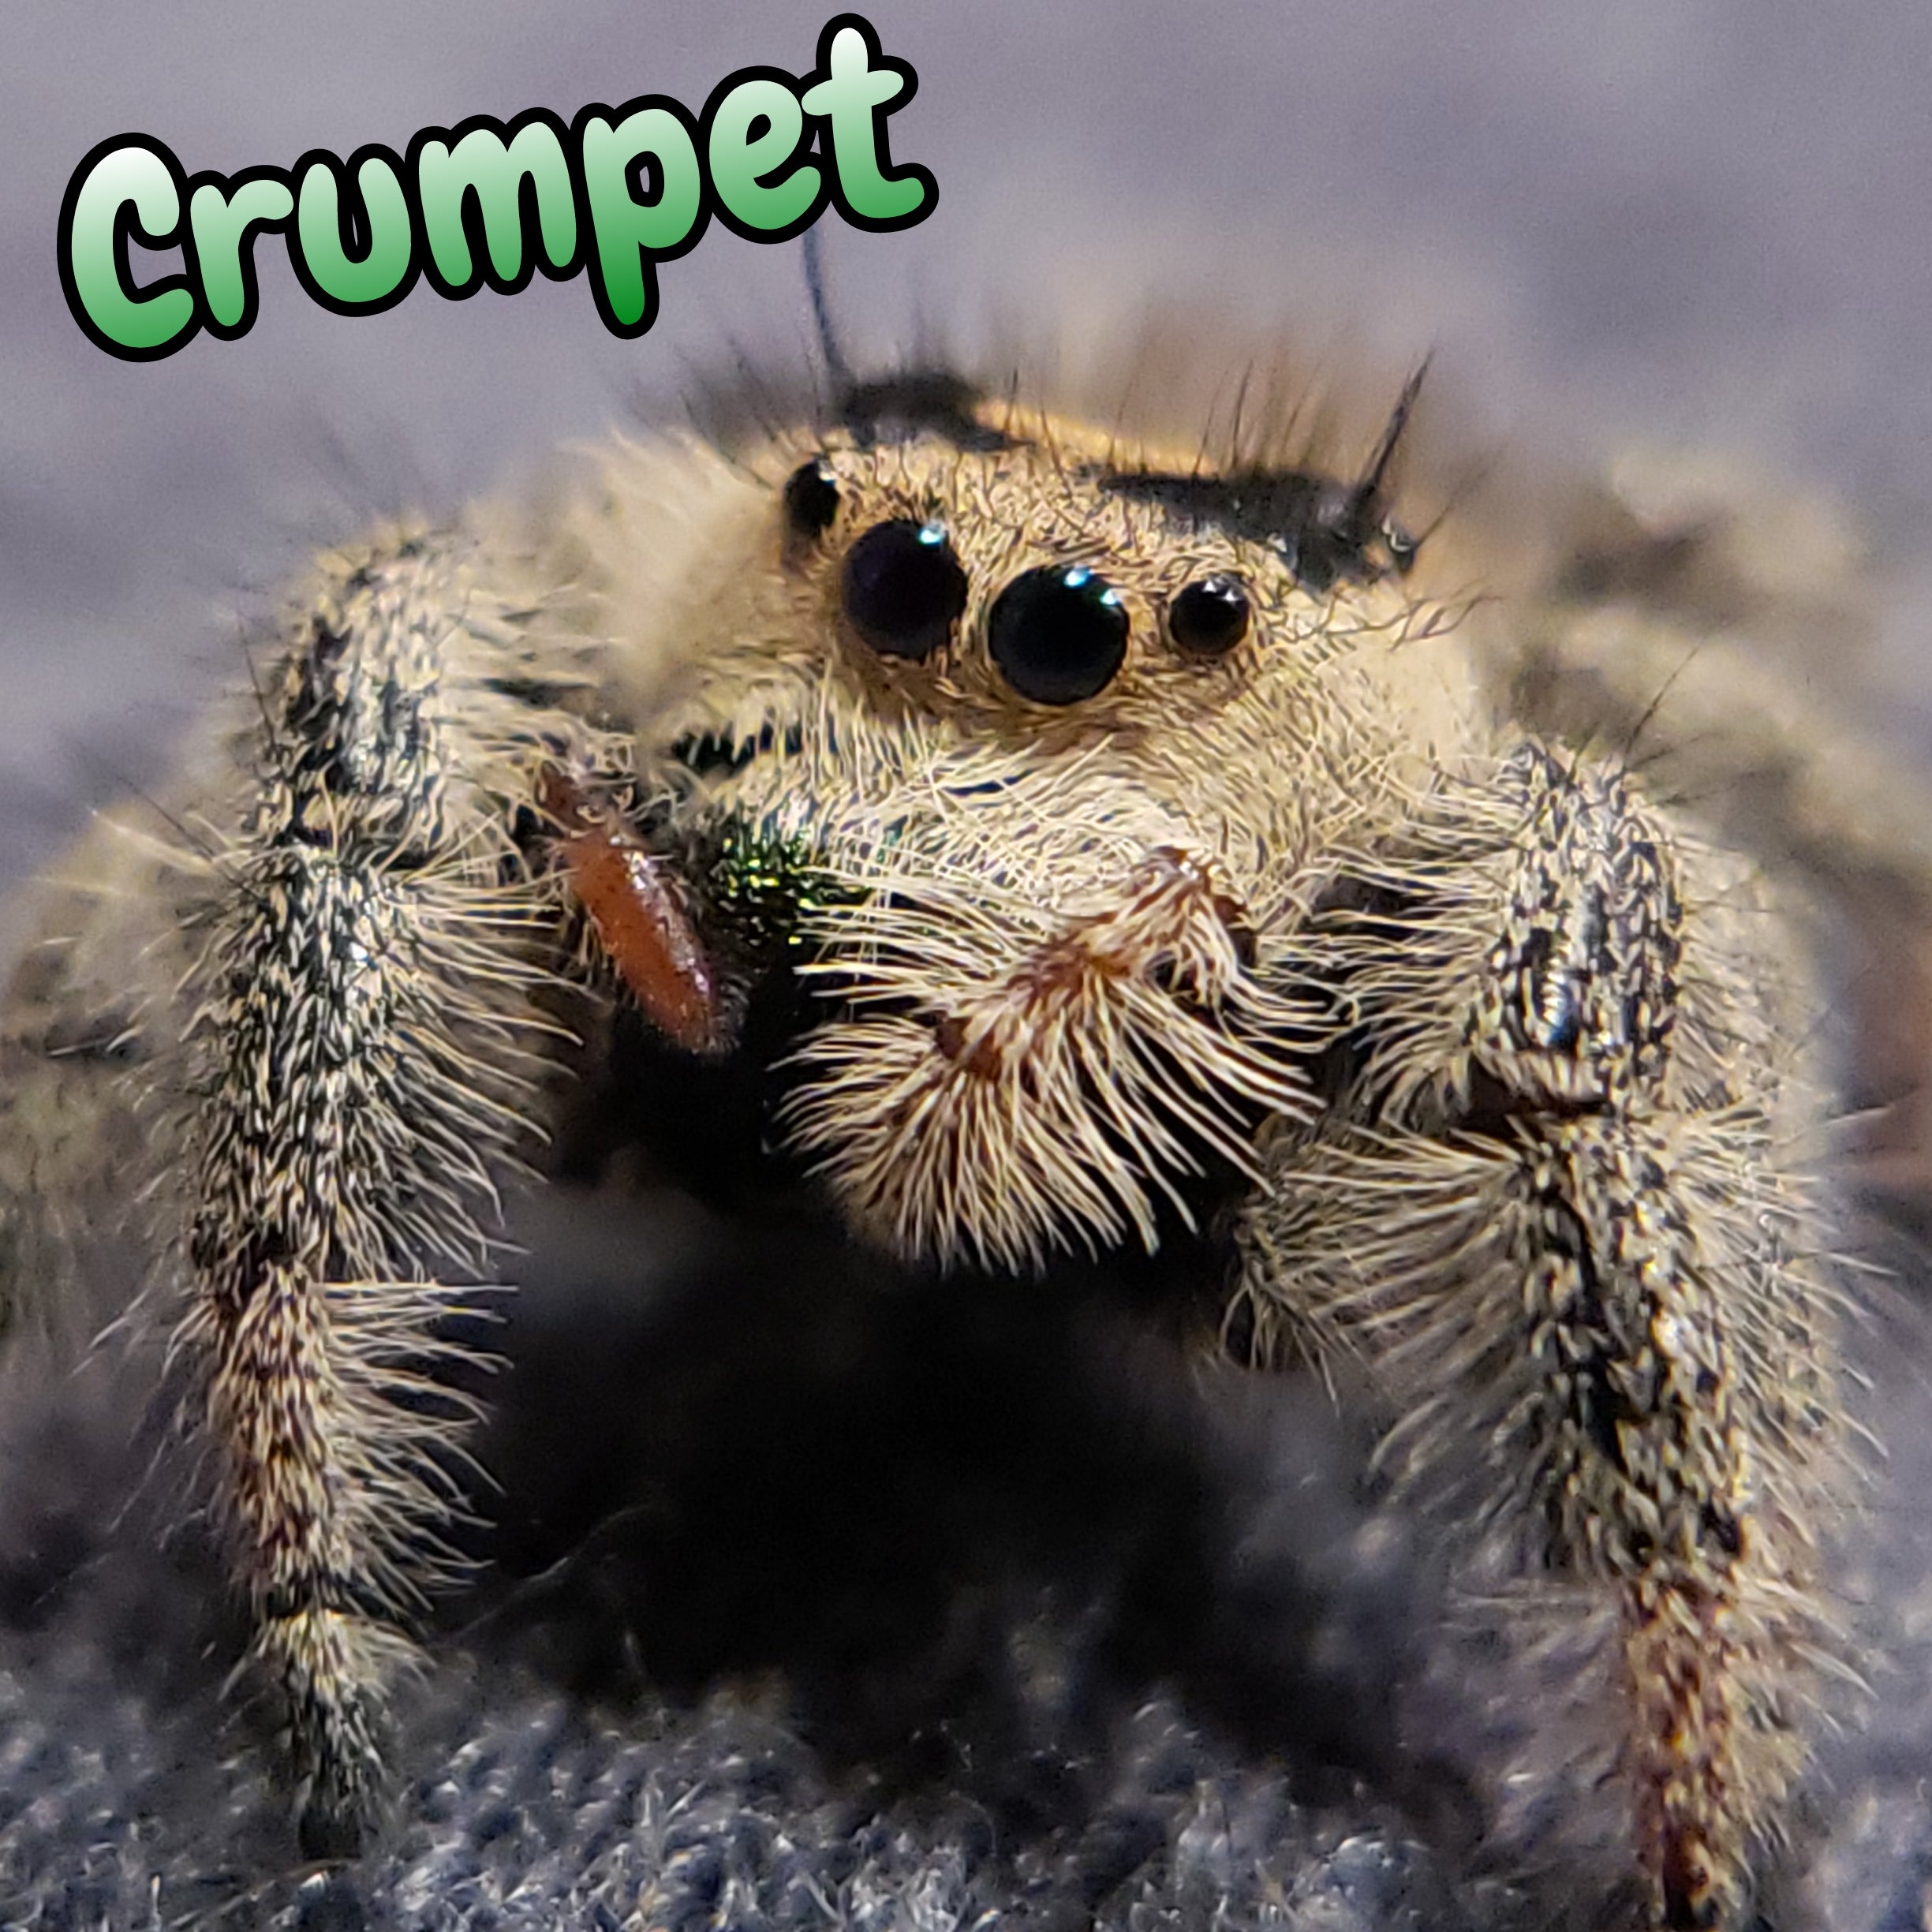 Regal Jumping Spider "Crumpet"